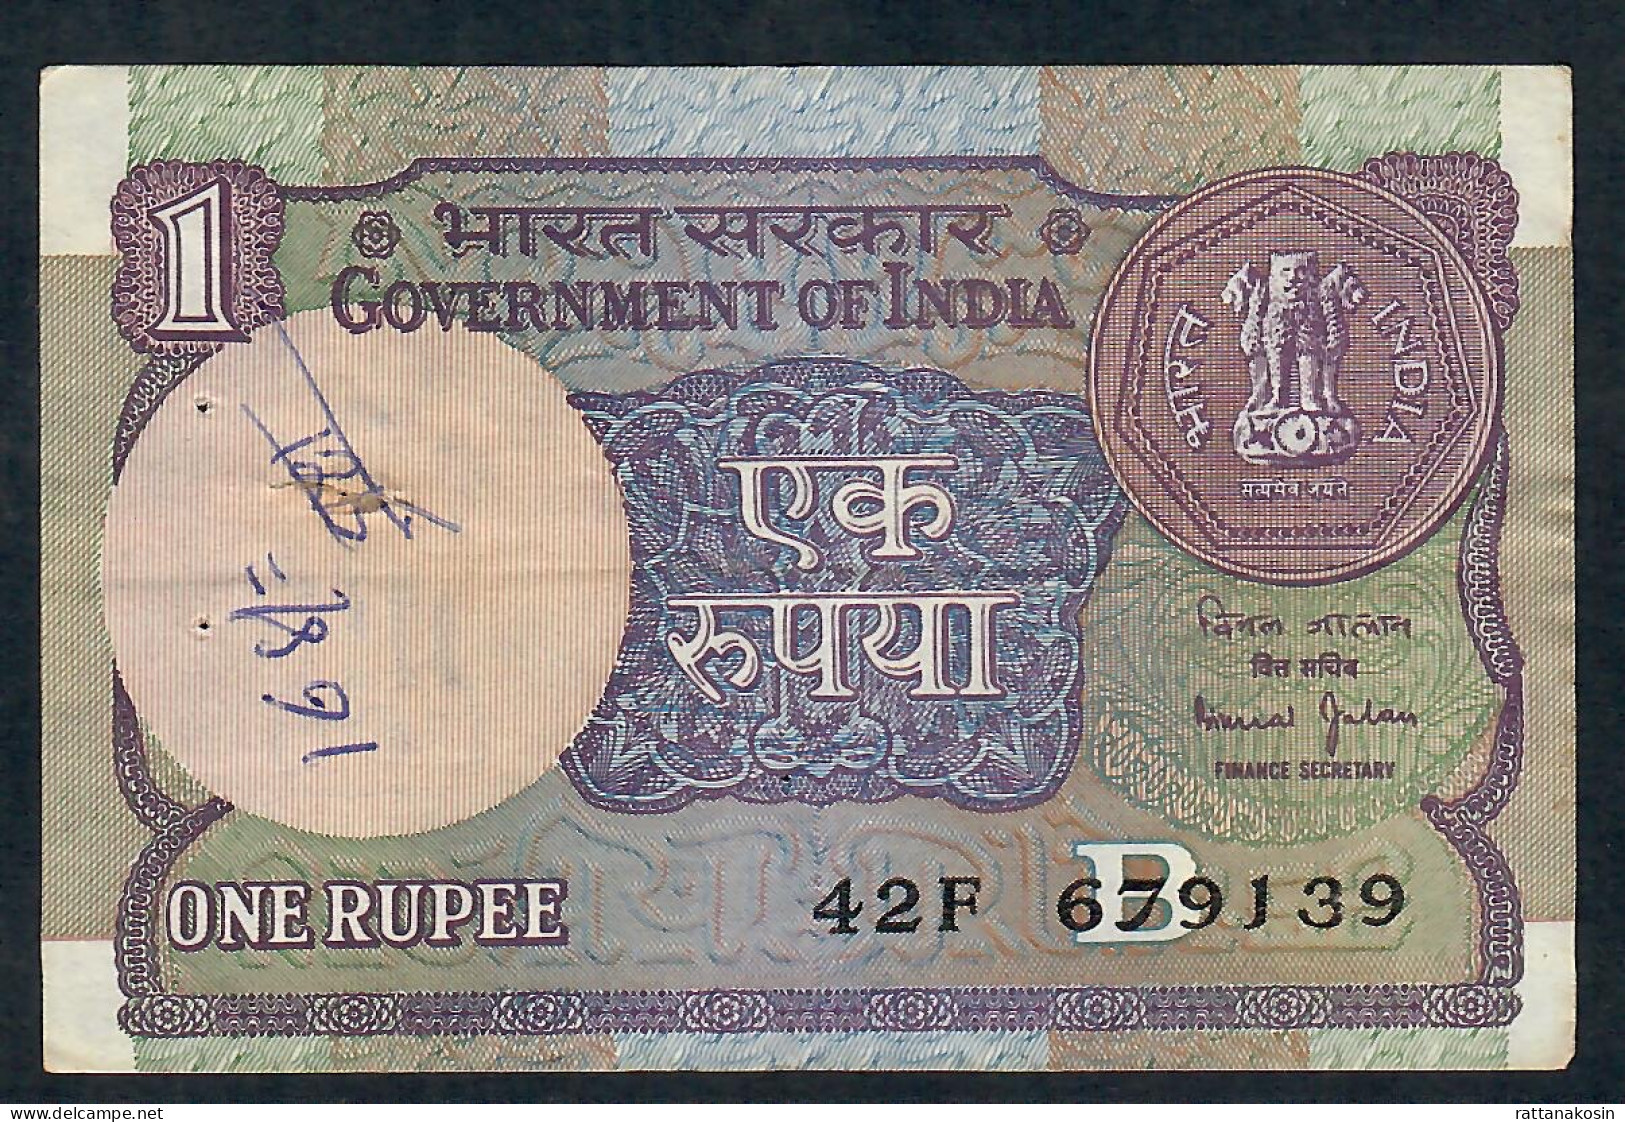 INDIA P78Aj 1 RUPEE 1990  LETTER B Signature JALAN #42F   FINE - Inde